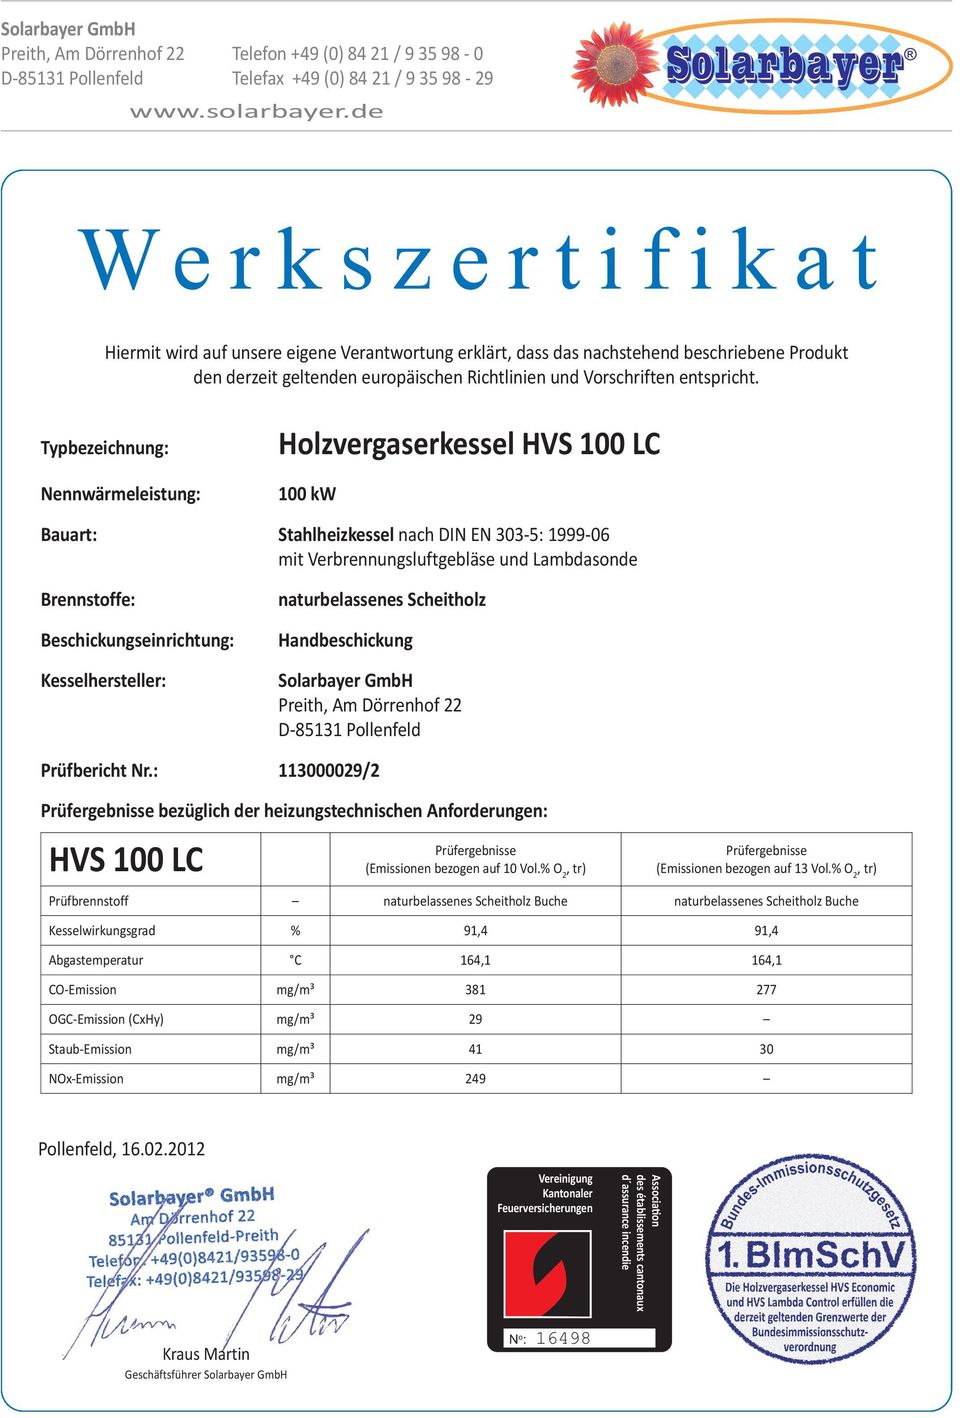 Buche Buche Kesselwirkungsgrad % 91,4 91,4 Abgastemperatur C 164,1 164,1 CO-Emission mg/m³